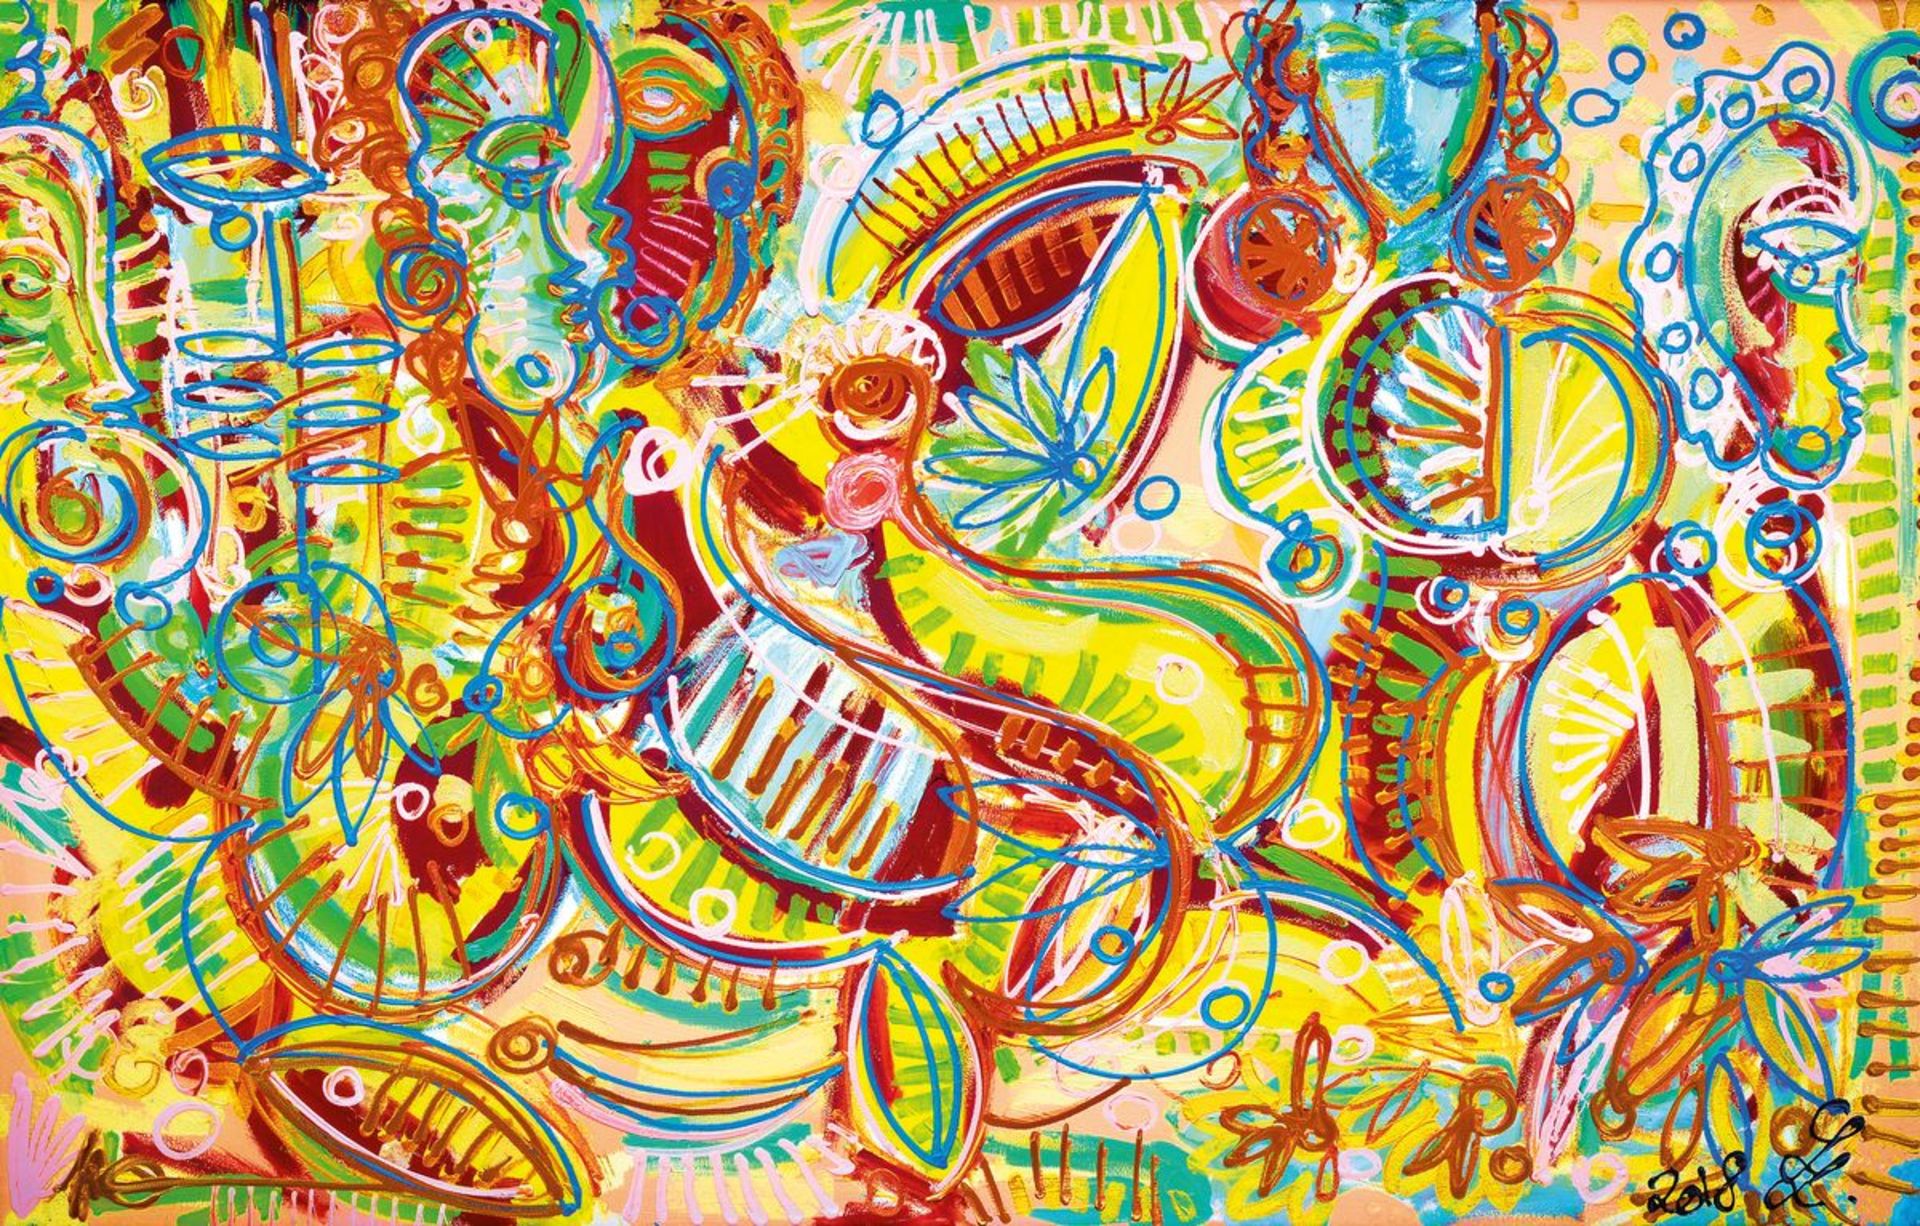 Leon Löwentraut, born 1998, 12-colors pigment print, "Caribbean Flair", on canvas, von Hand